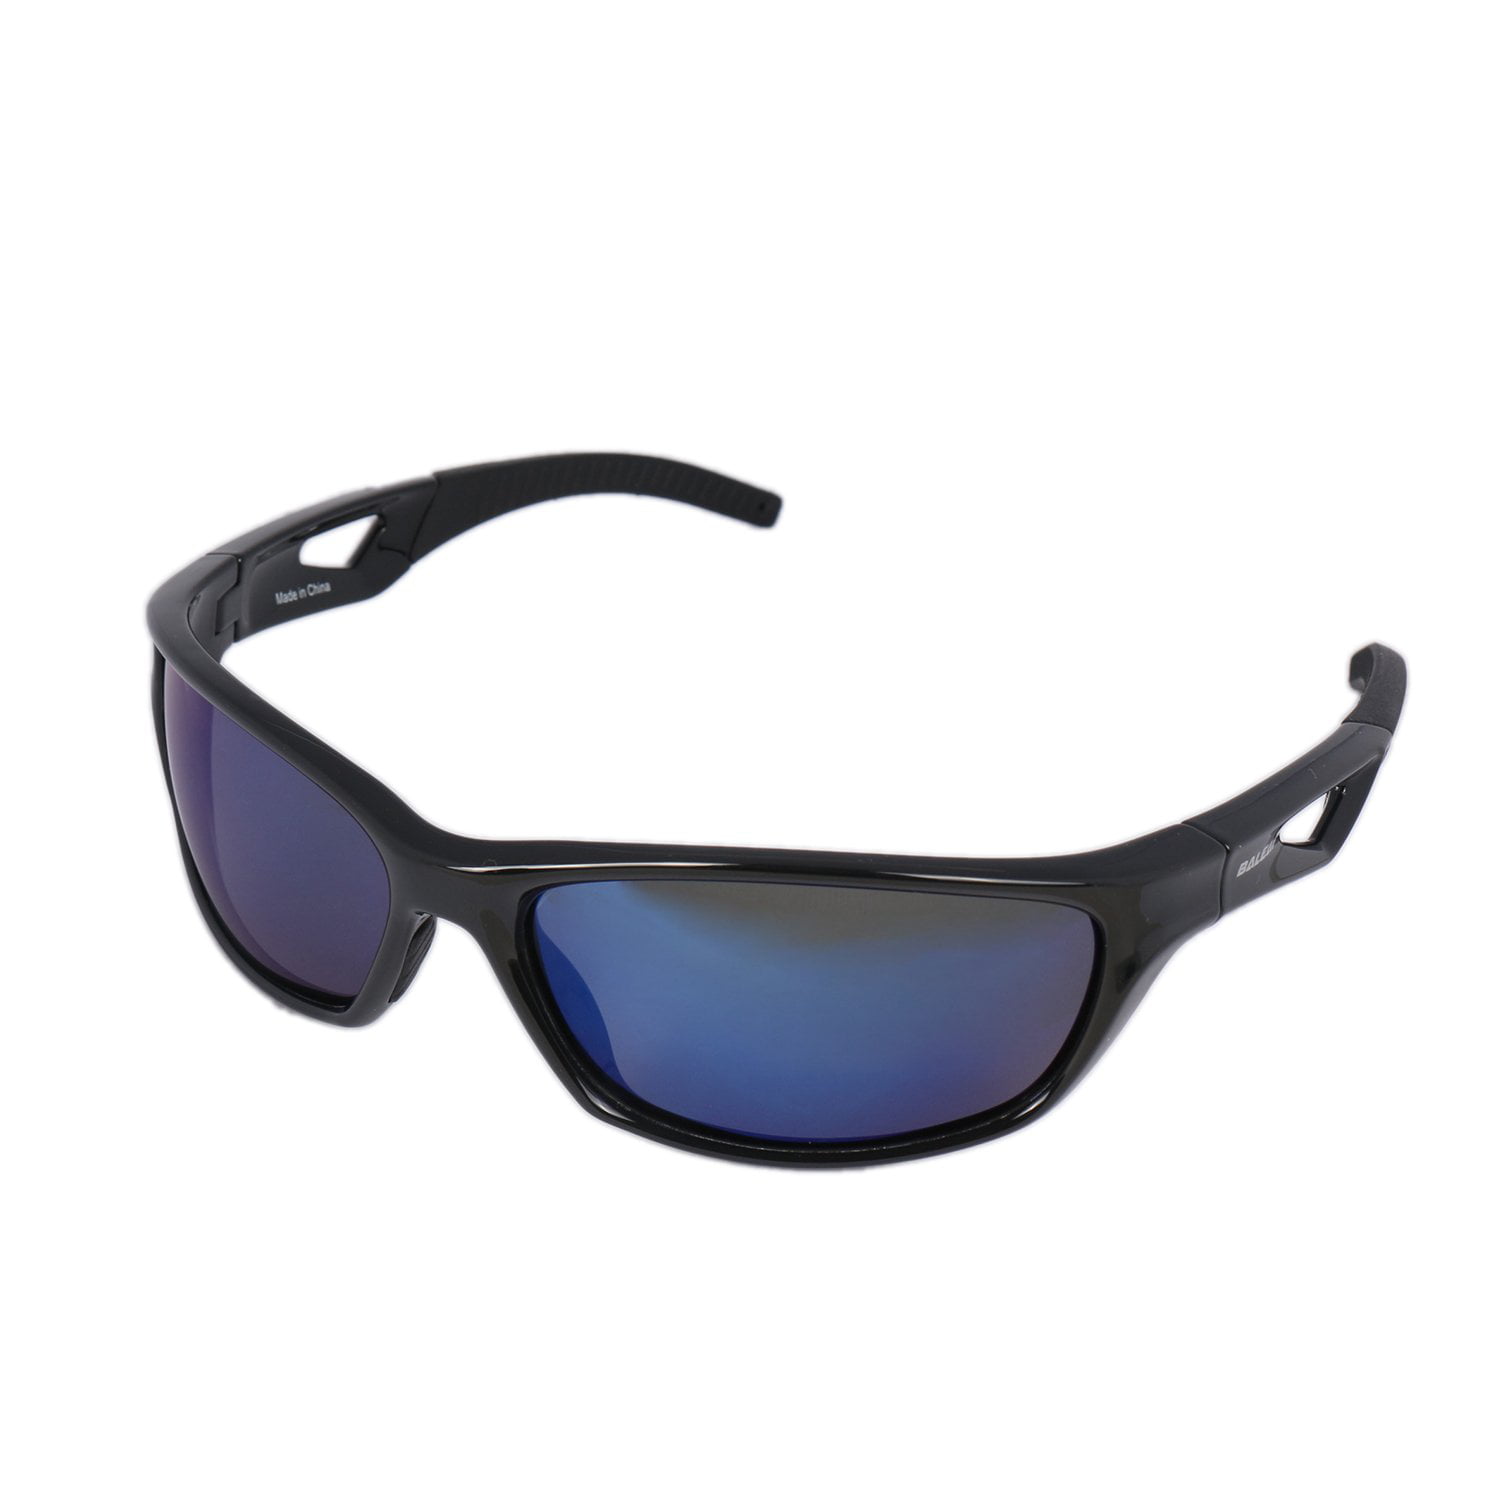 BALEAF Sports Polarized Sunglasses for Men Women UV400 Protection Lightweight Cycling Running Driving Fishing Eyewear 